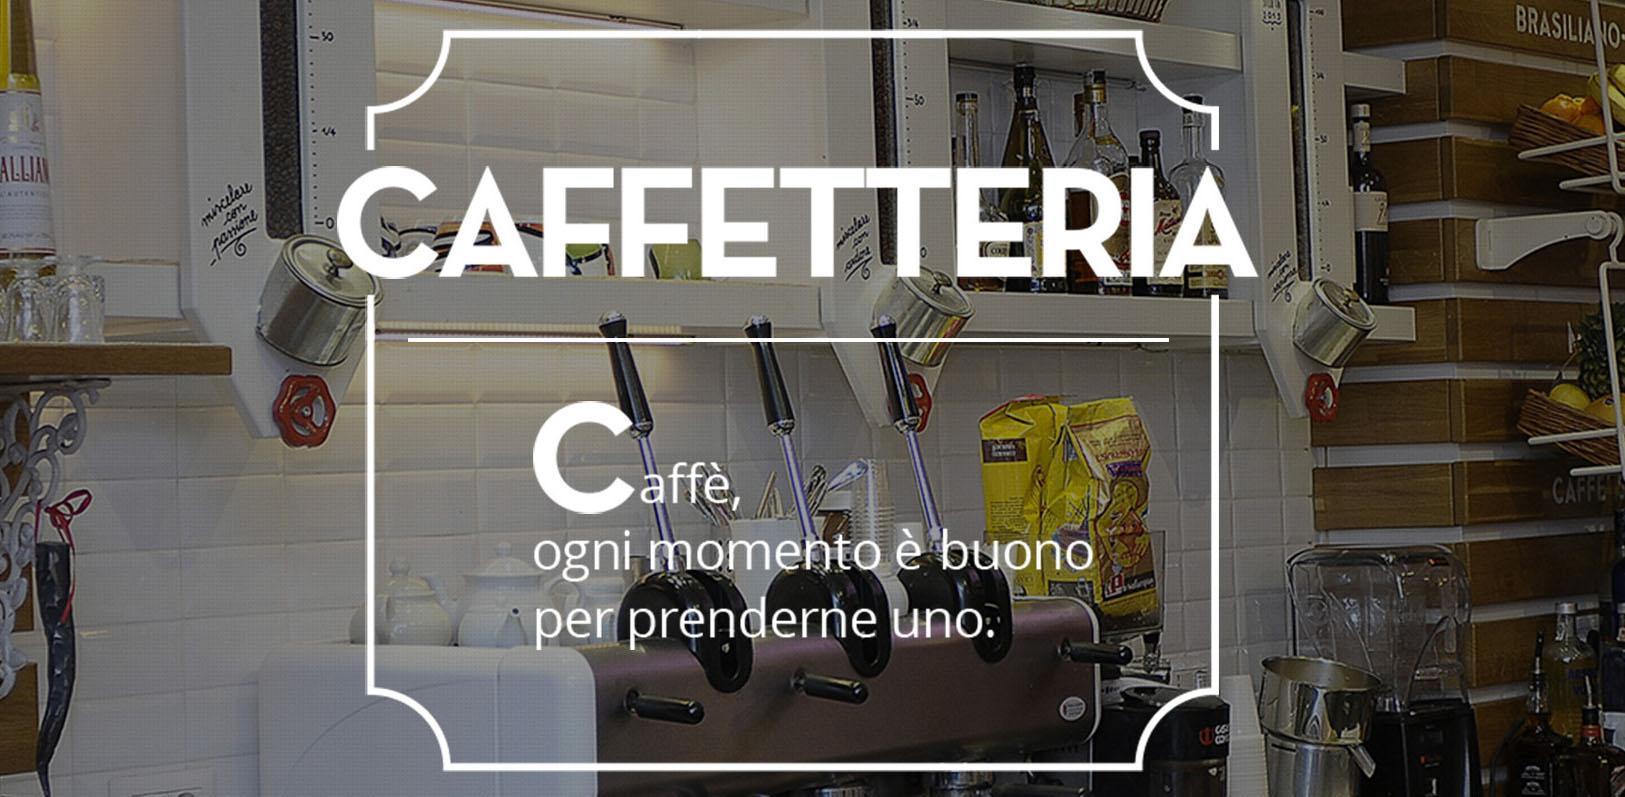 Fantasia Gelati - Caffè e Caffetteria